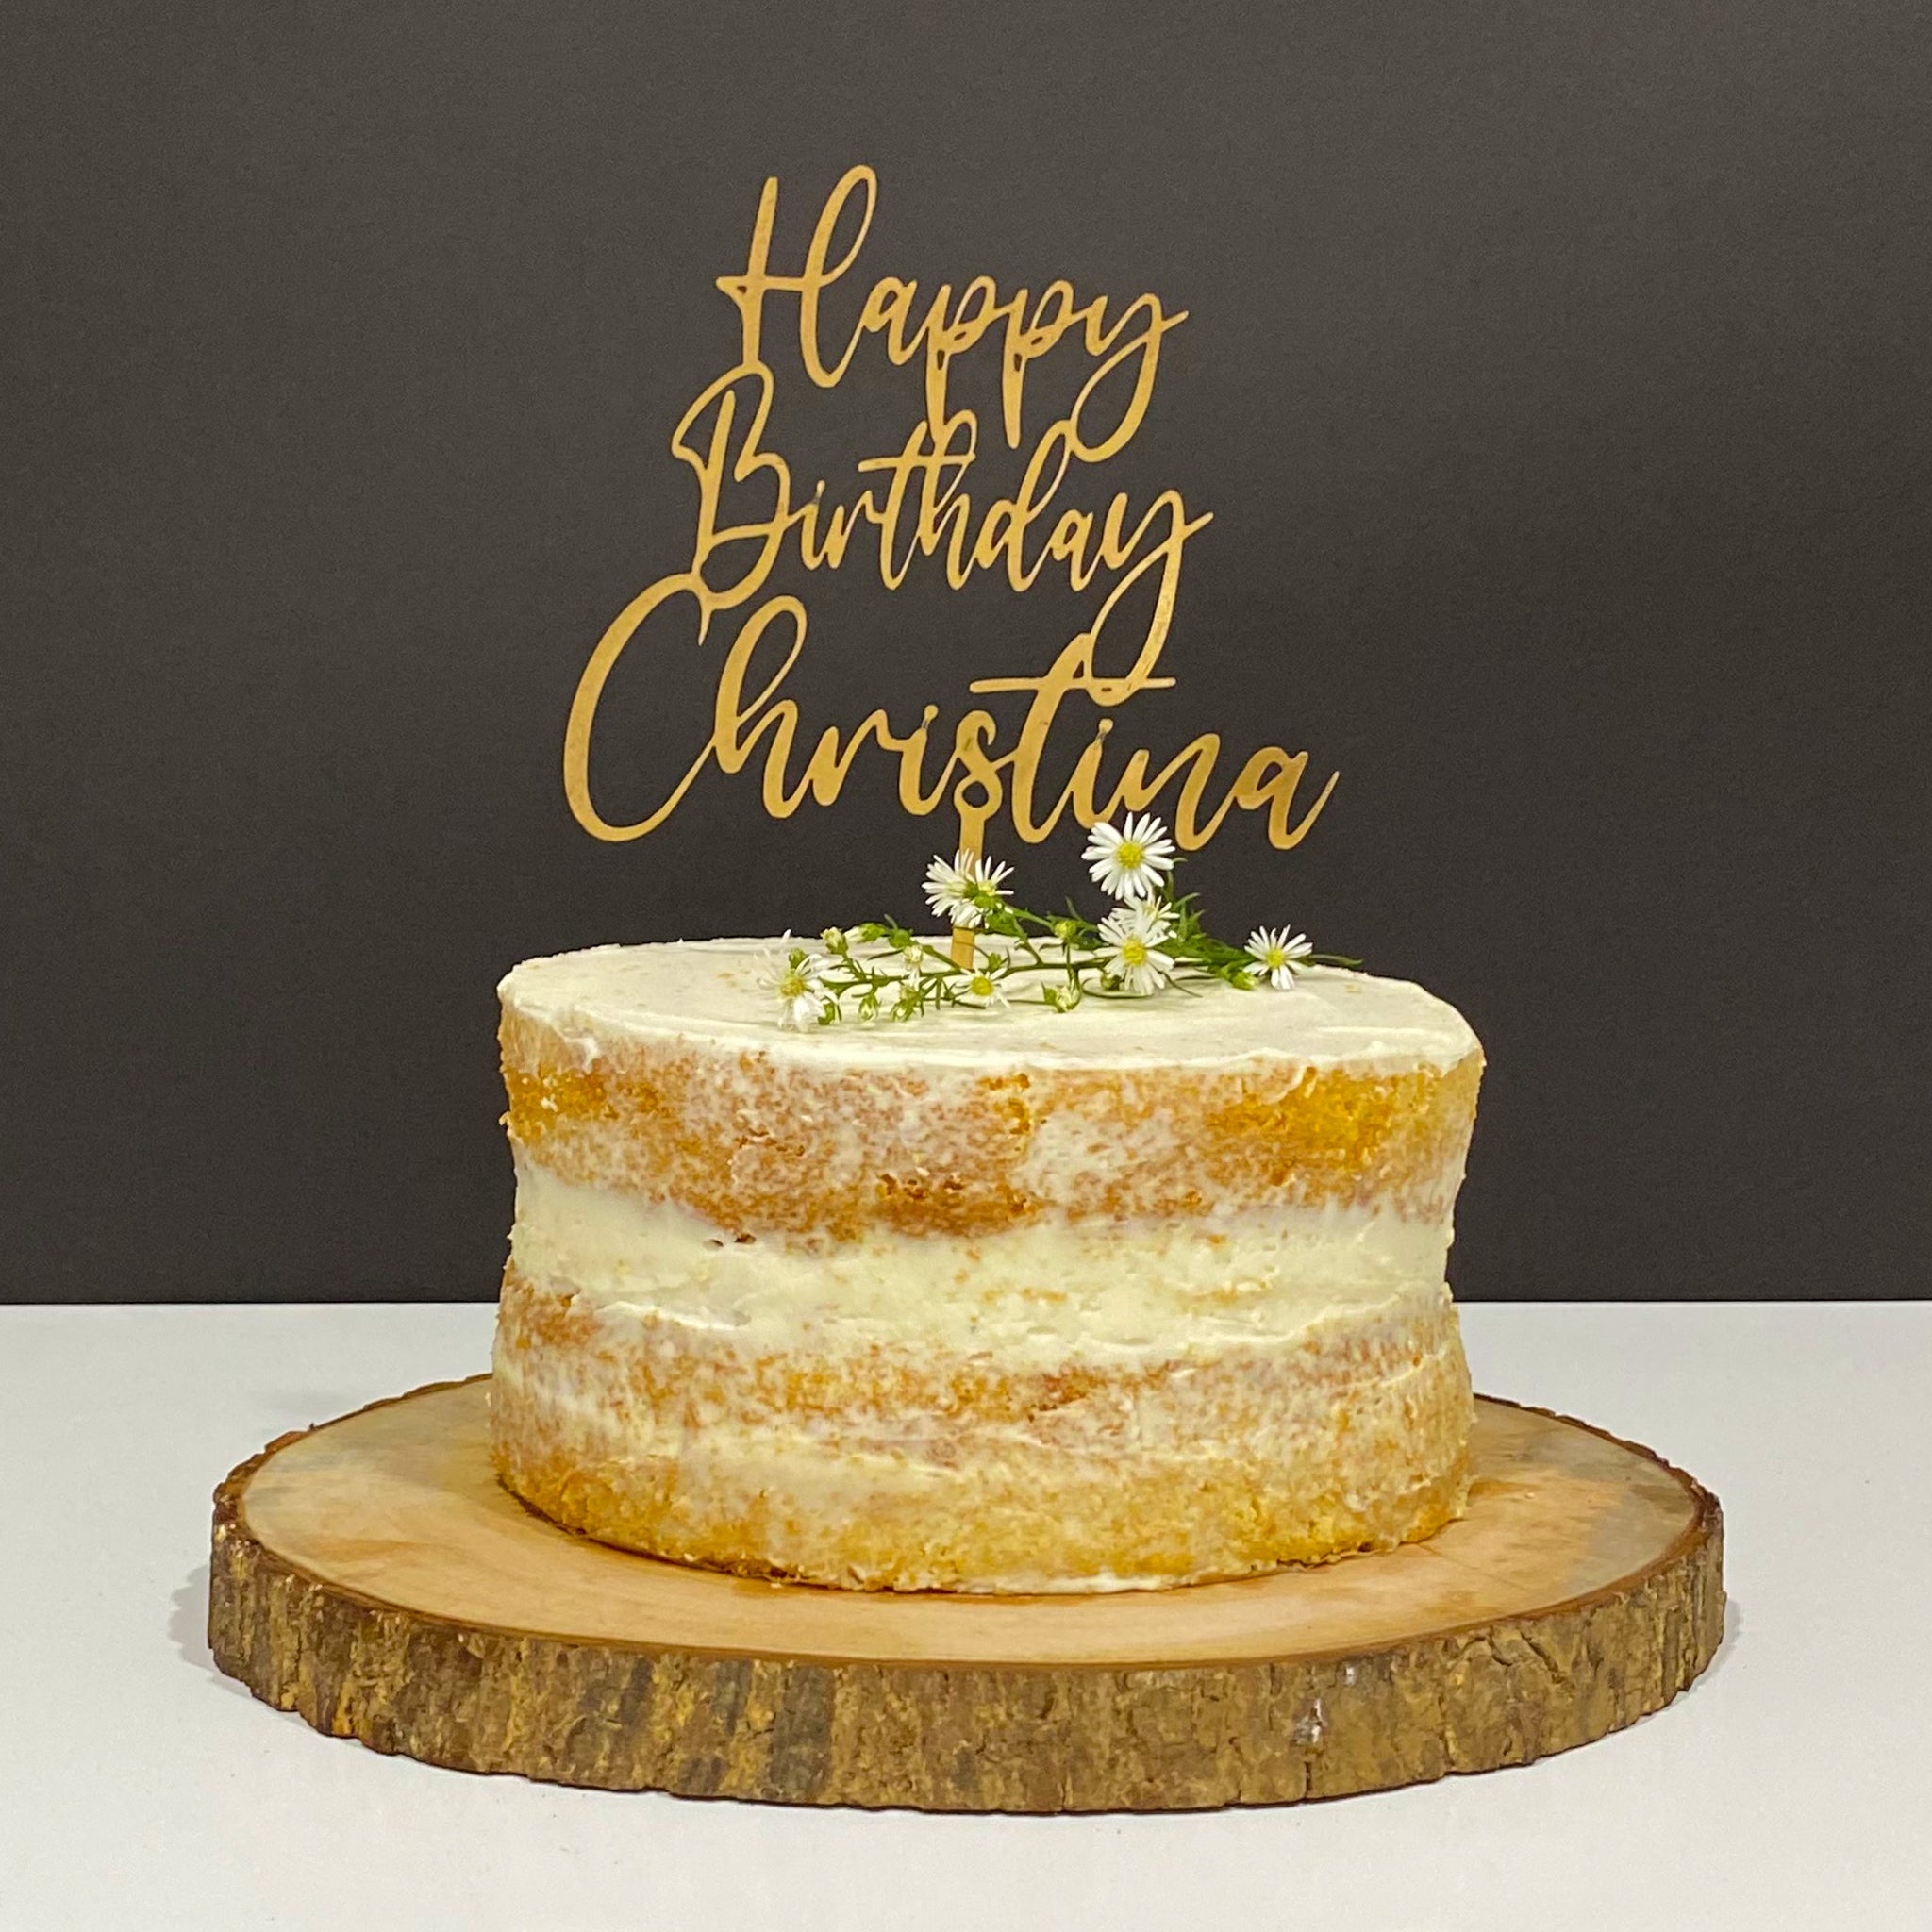 Nicole Richie's 30th Birthday Cake Looks Like A Wedding Cake - Weddingbells